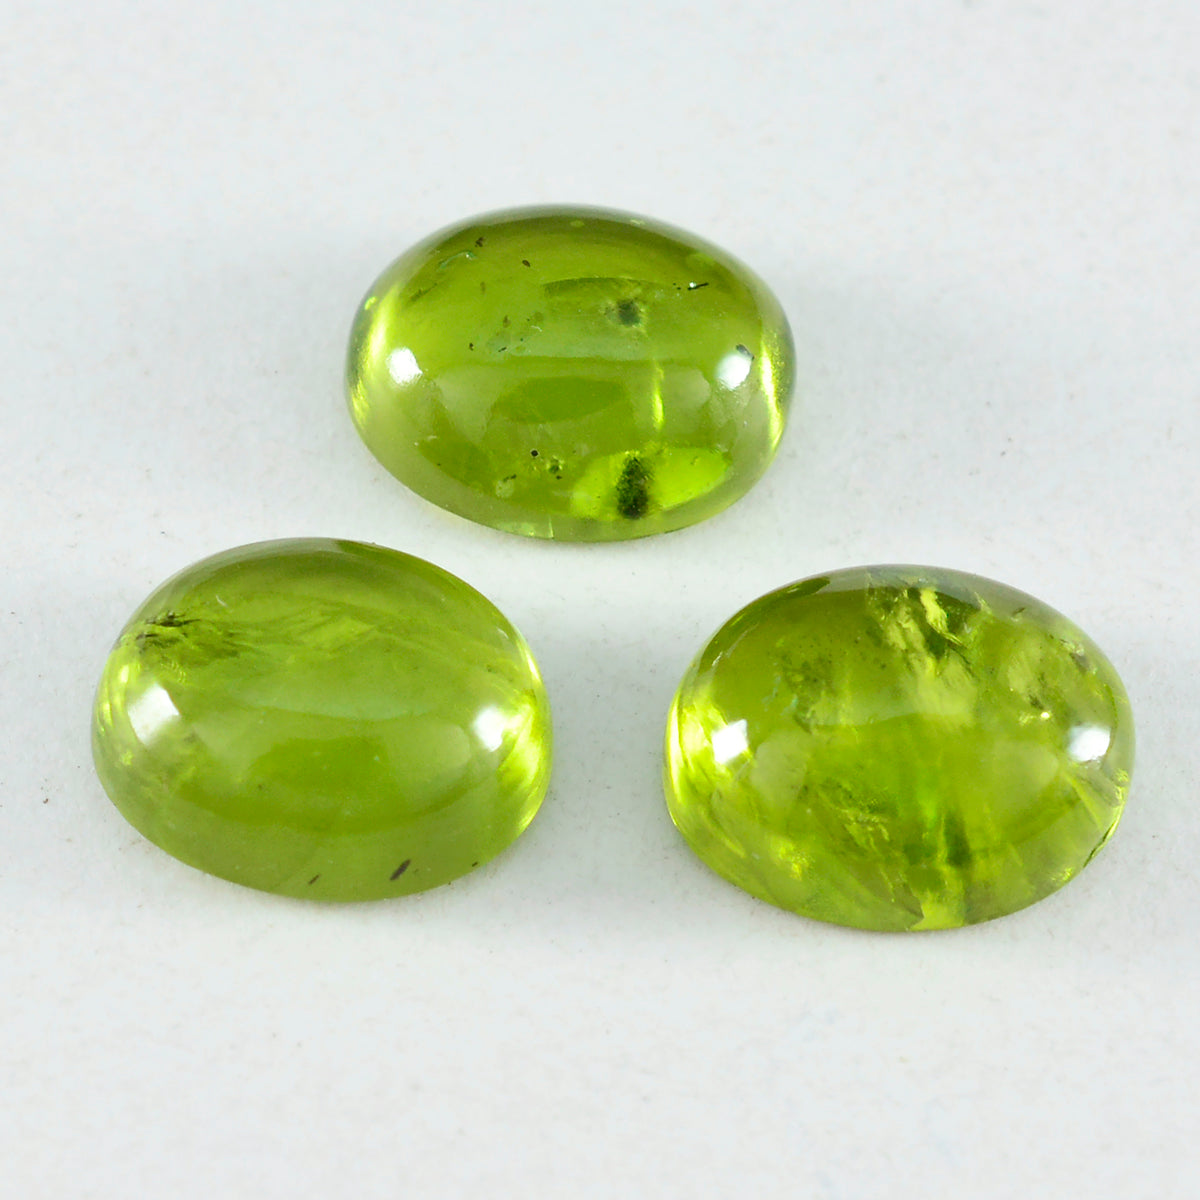 Riyogems 1PC groene peridot cabochon 9X11 mm ovale vorm fantastische kwaliteit edelsteen